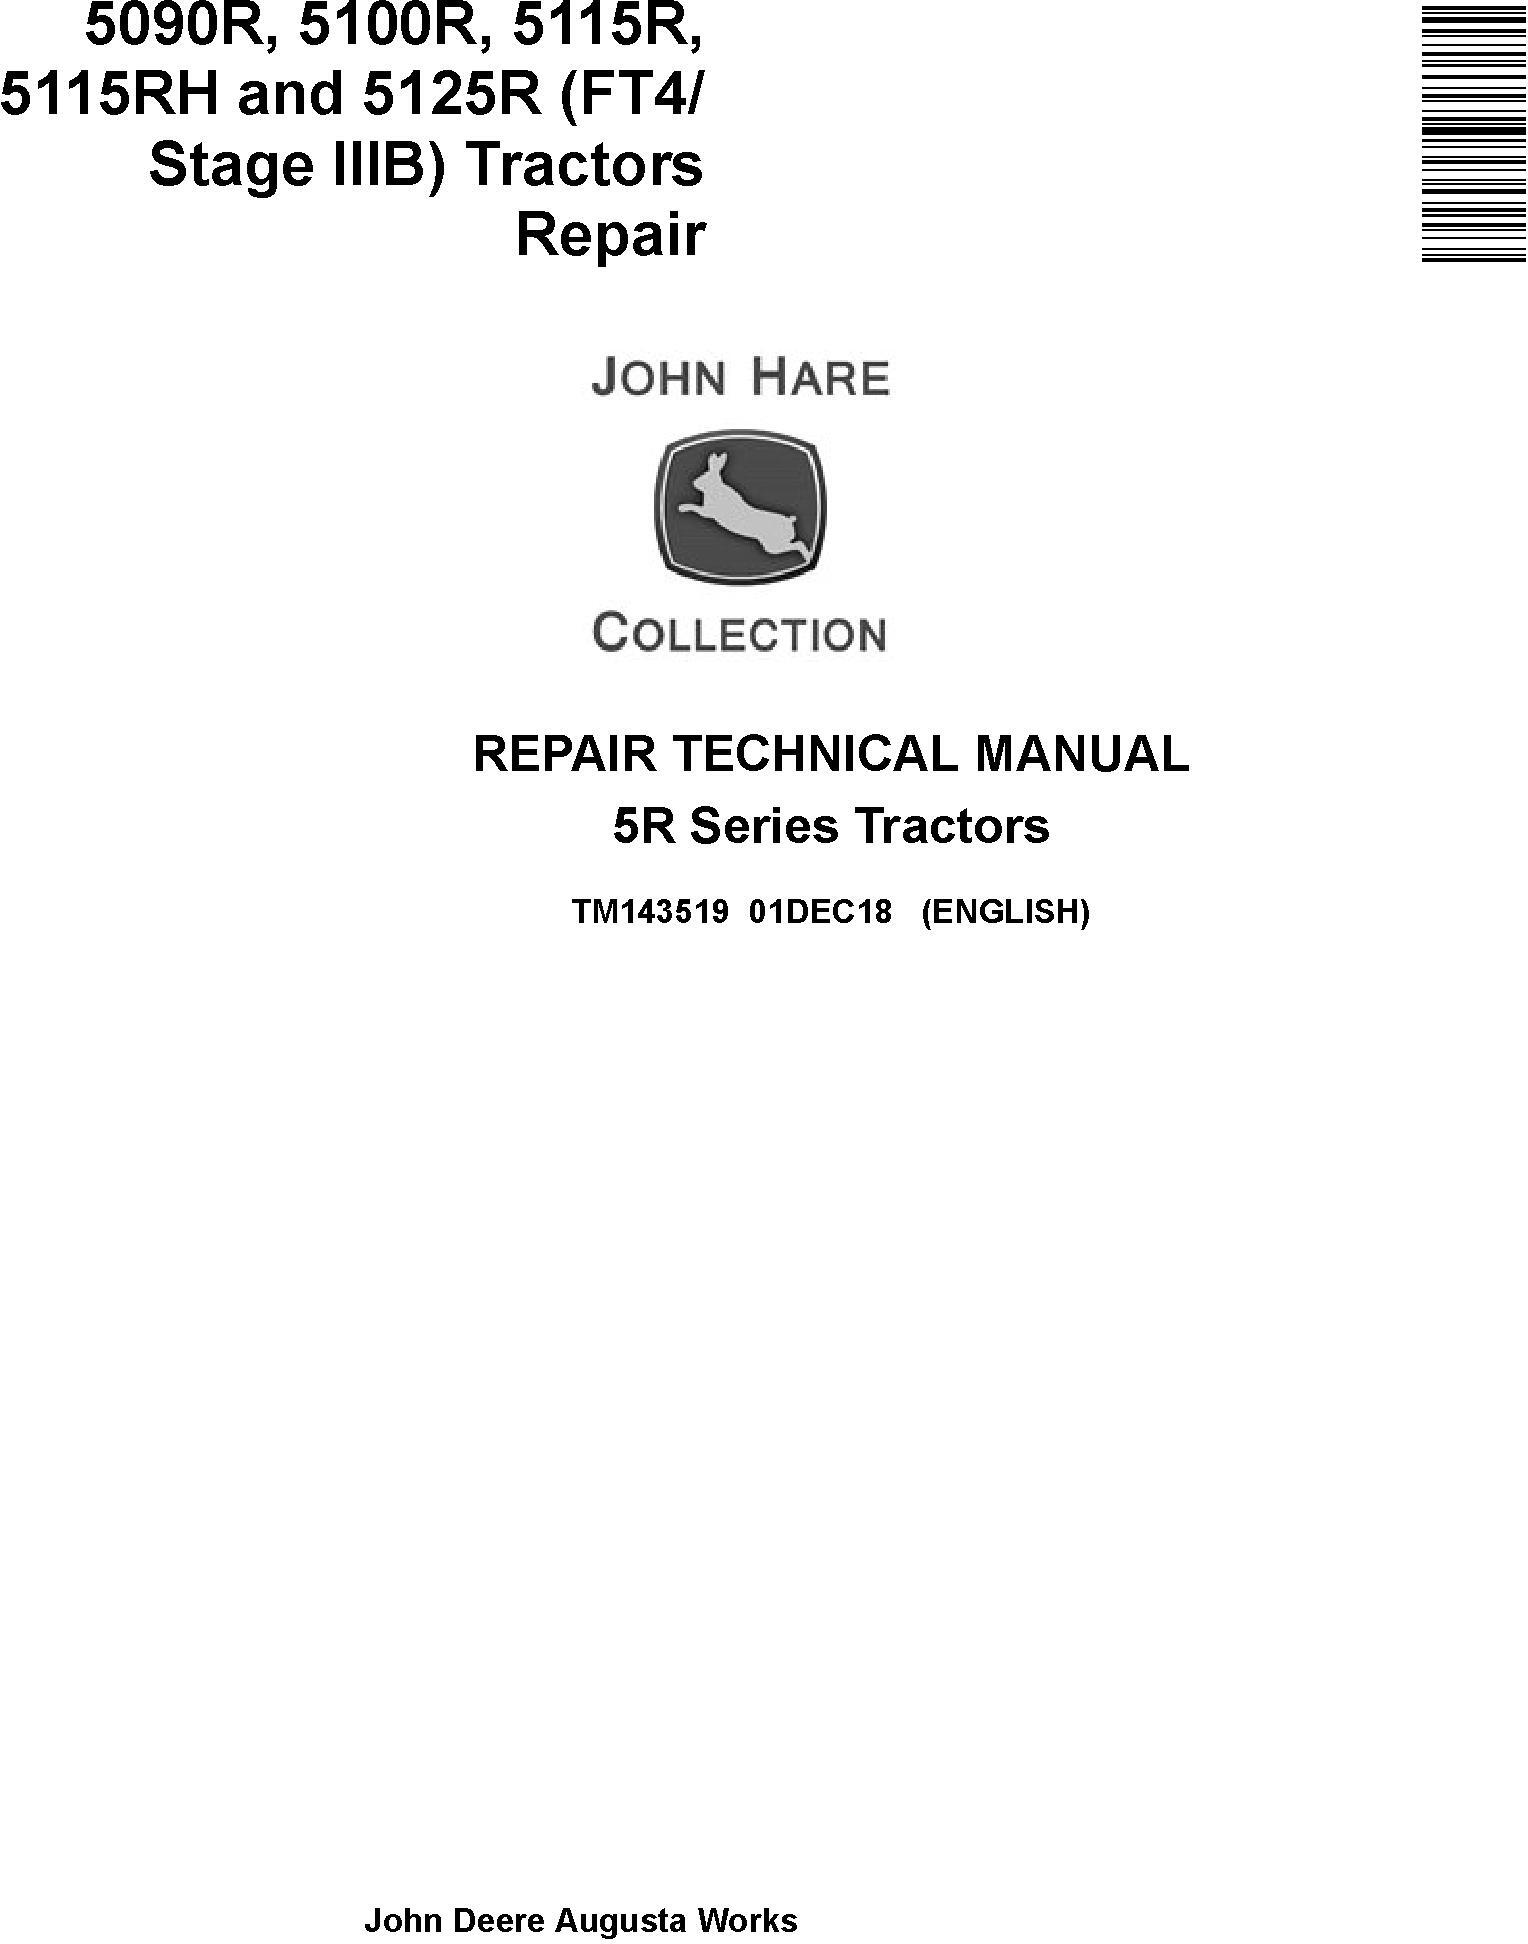 John Deere 5090R, 5100R, 5115R, 5115RH, 5125R Tractors Repair Technical Service Manual (TM143519)